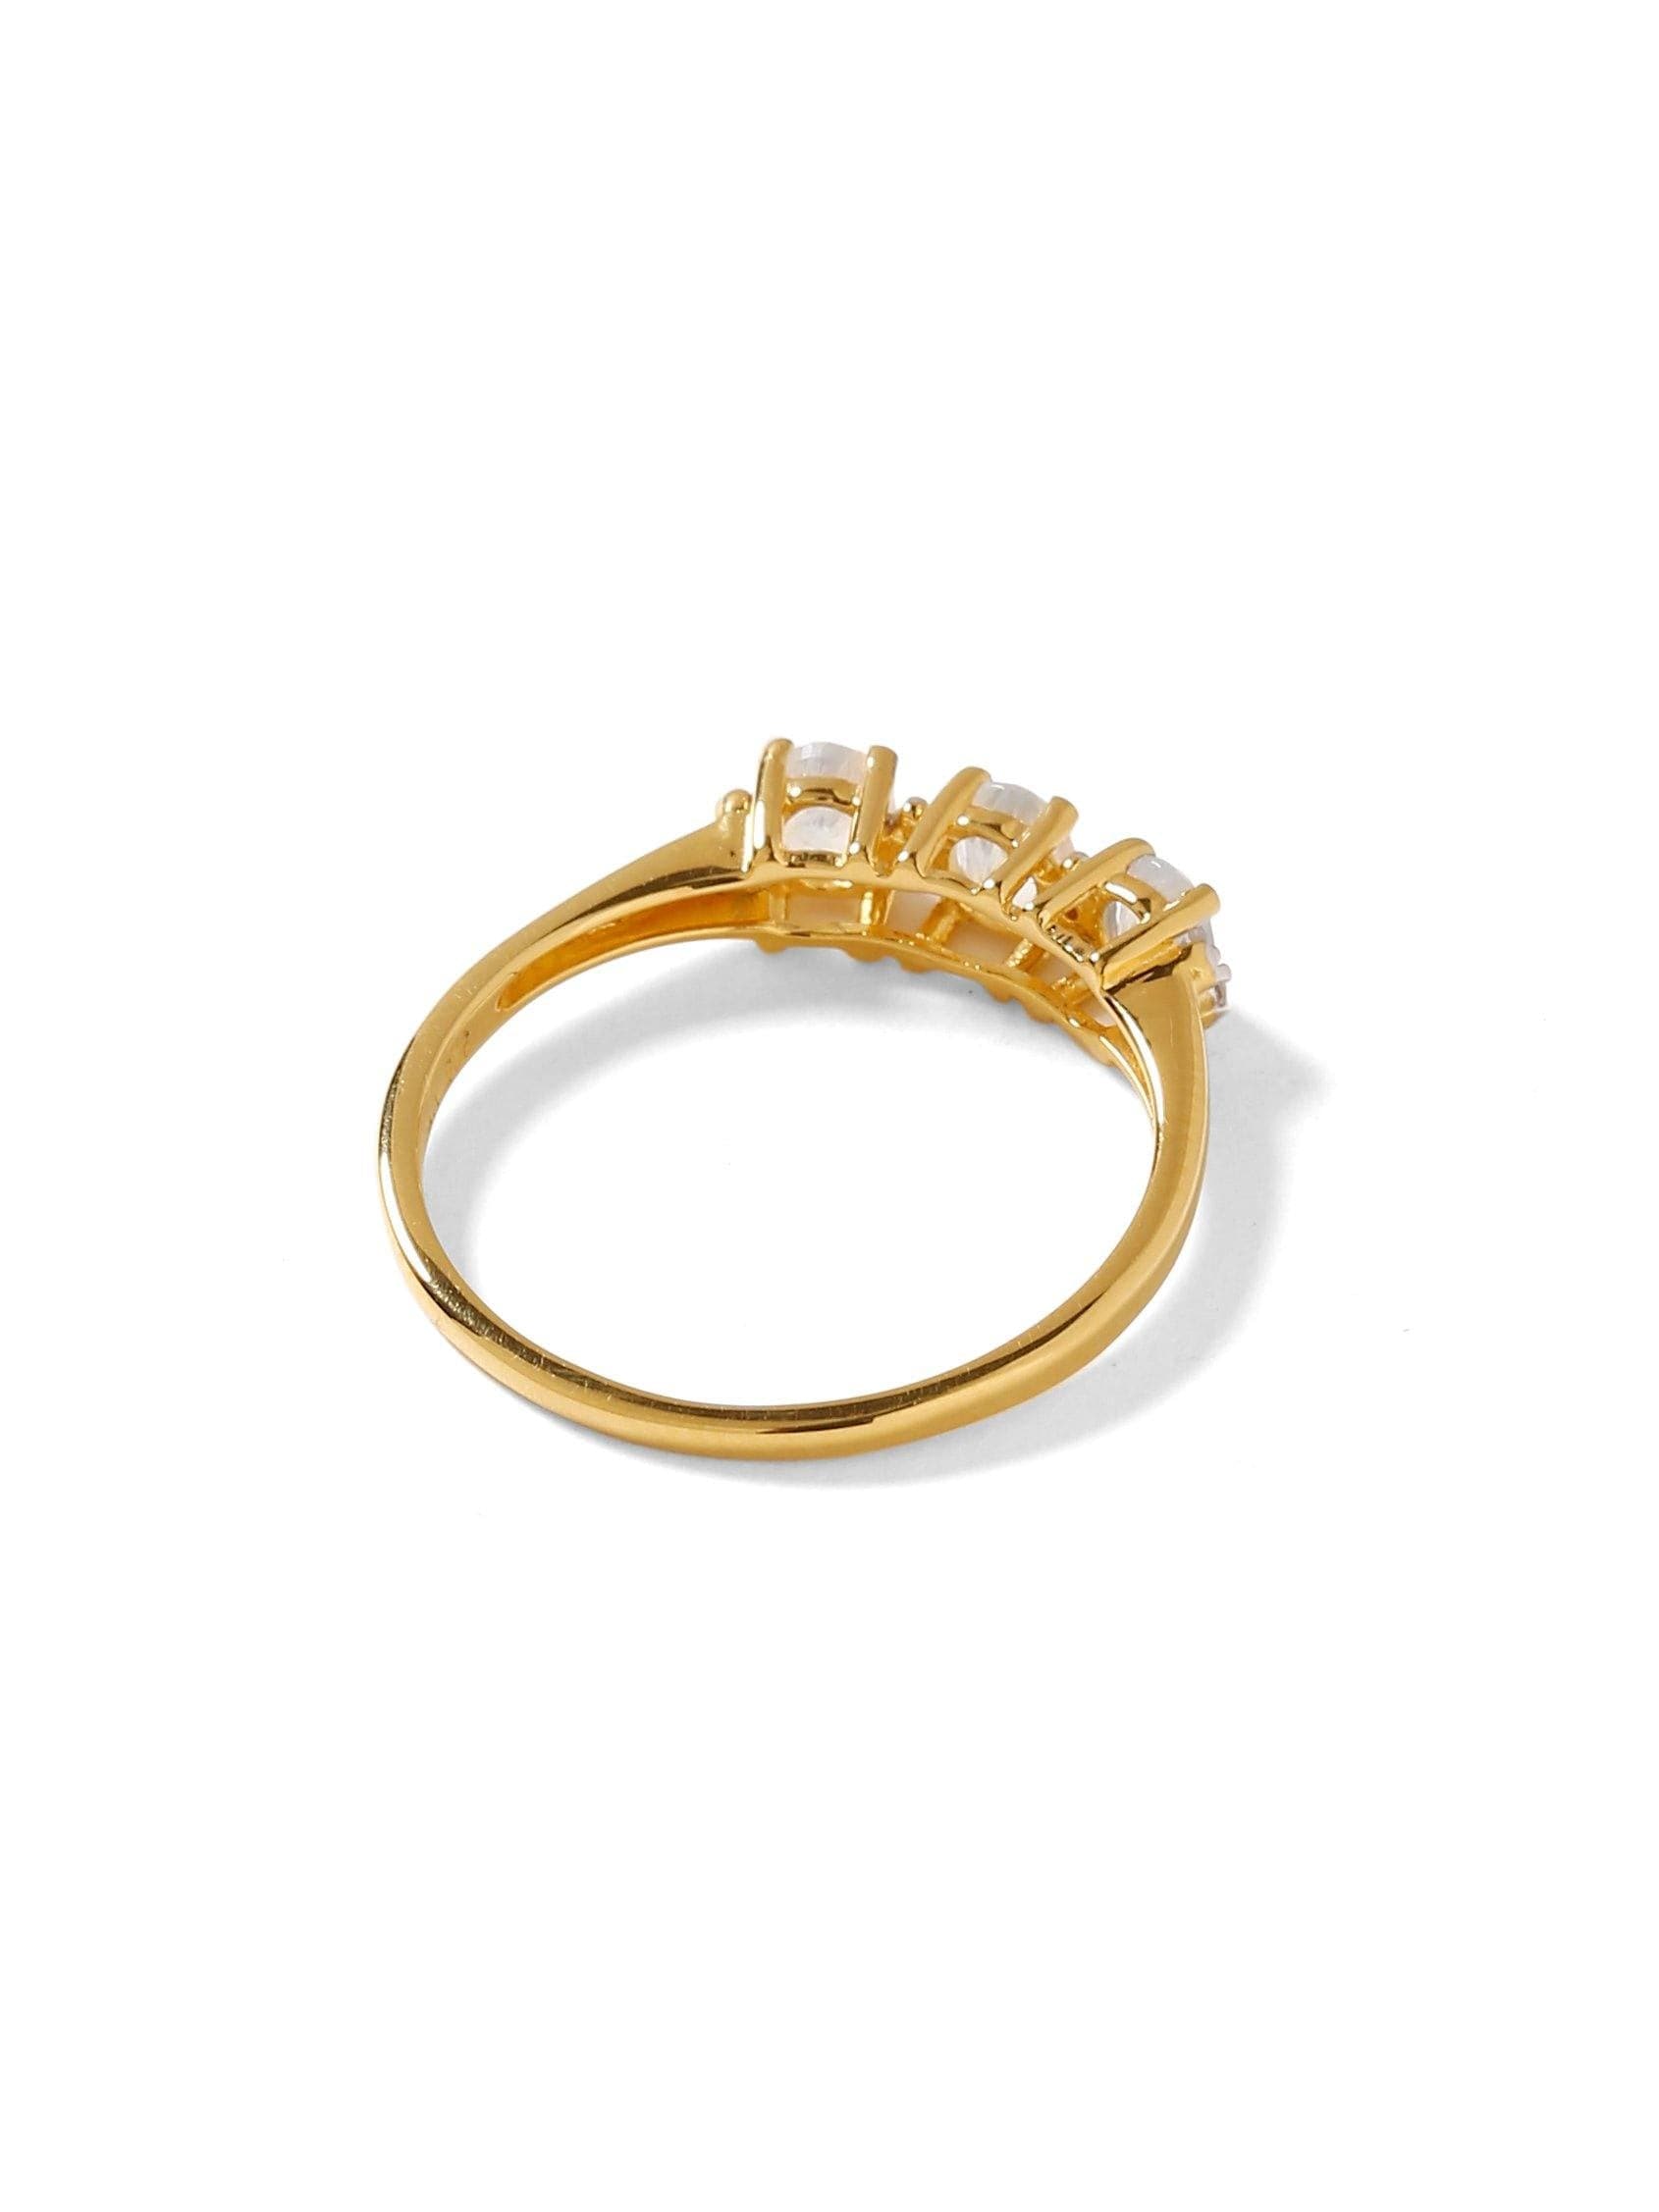 0.46 Ct. Rainbow Moonstone Solid 10k Yellow Gold Ring Jewelry - YoTreasure